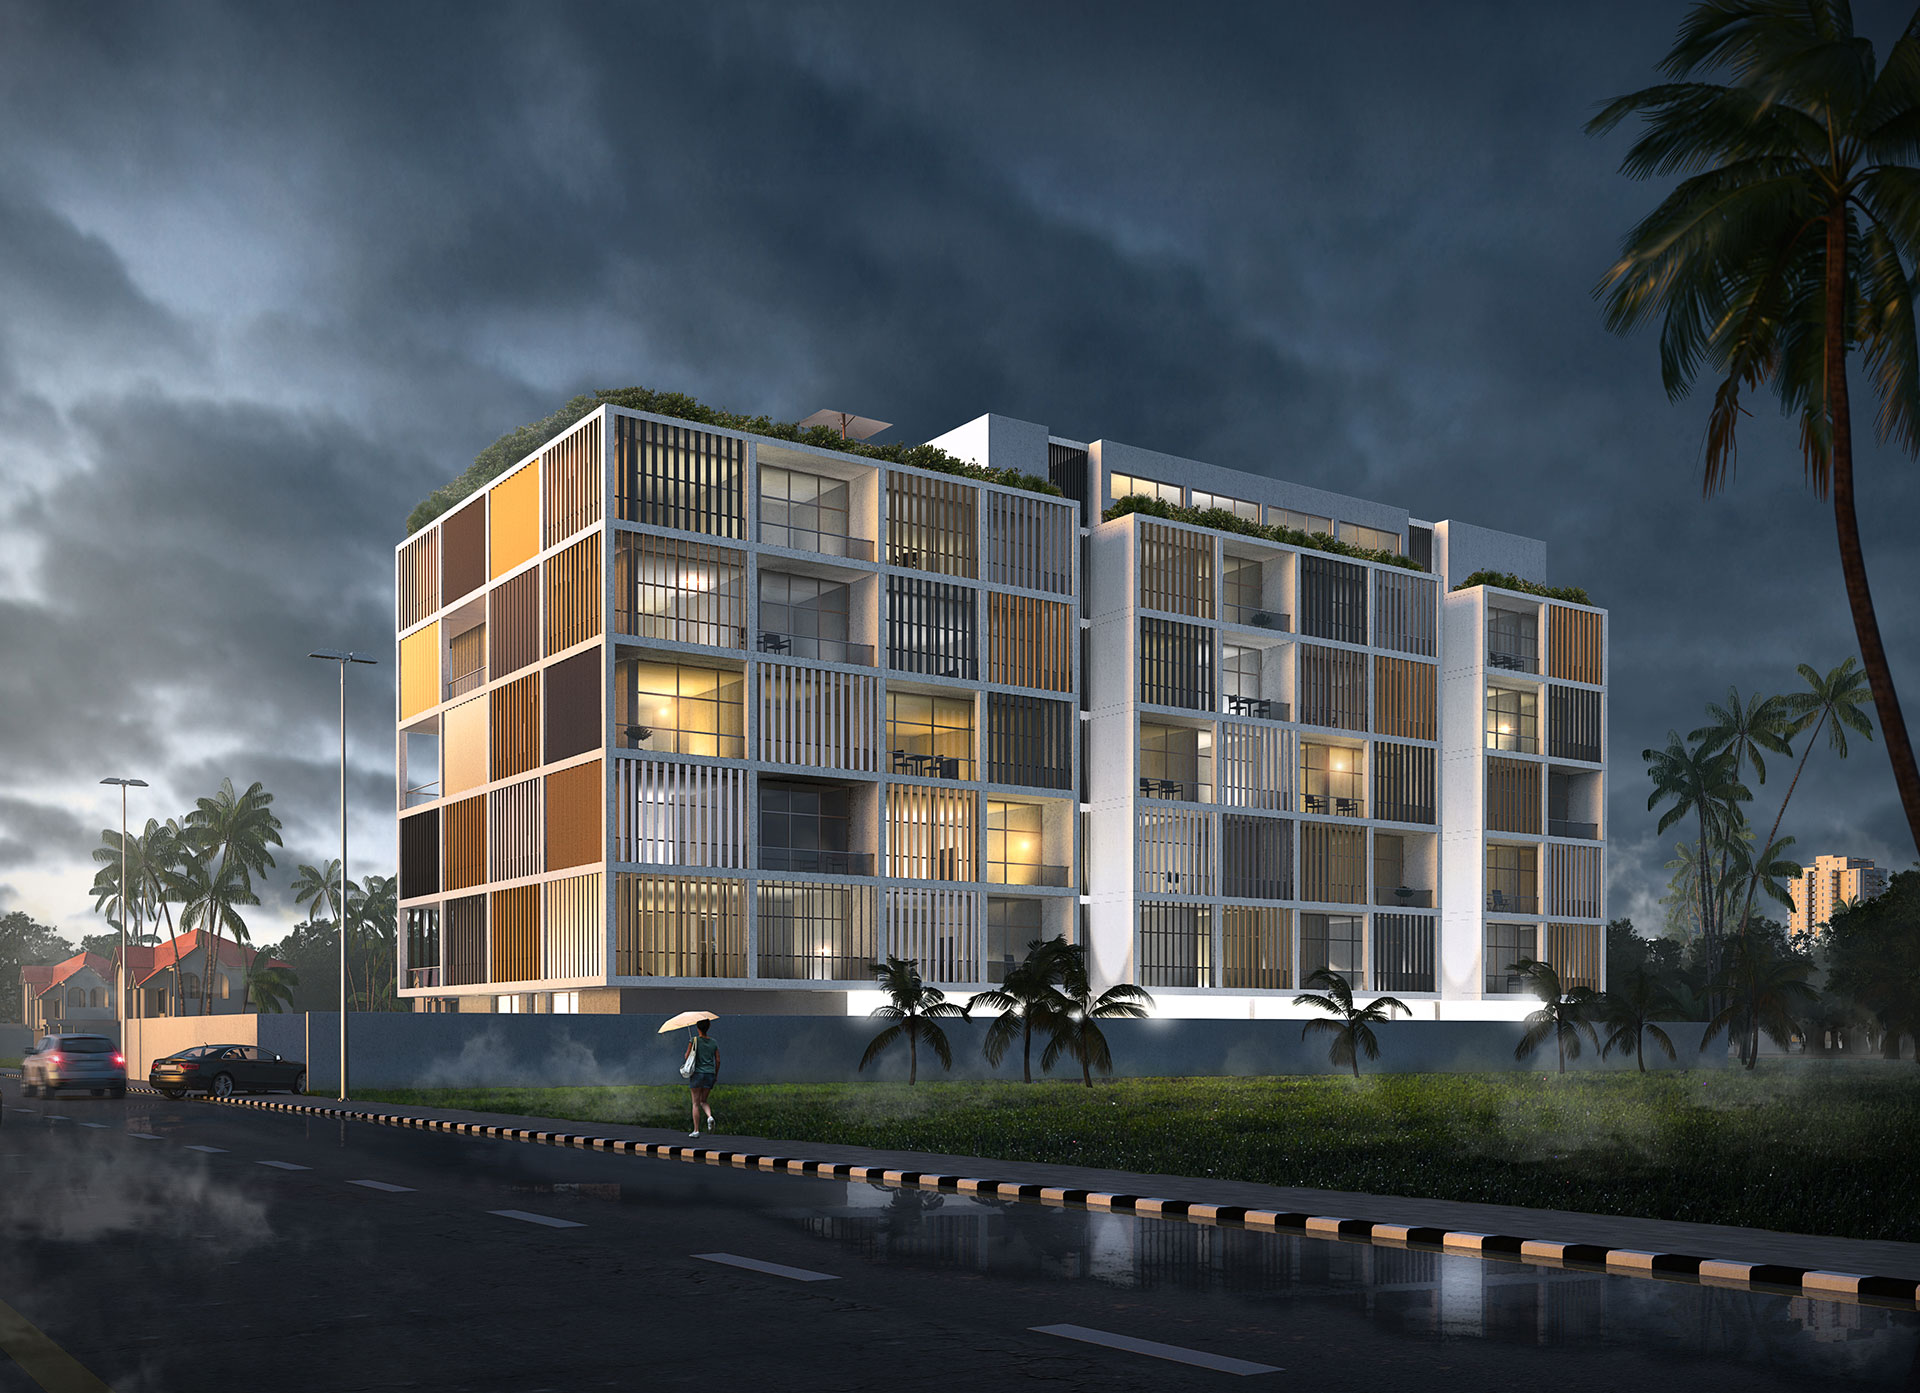 Residential Building / Lagos - Nigeria / Mohamad Makkouk